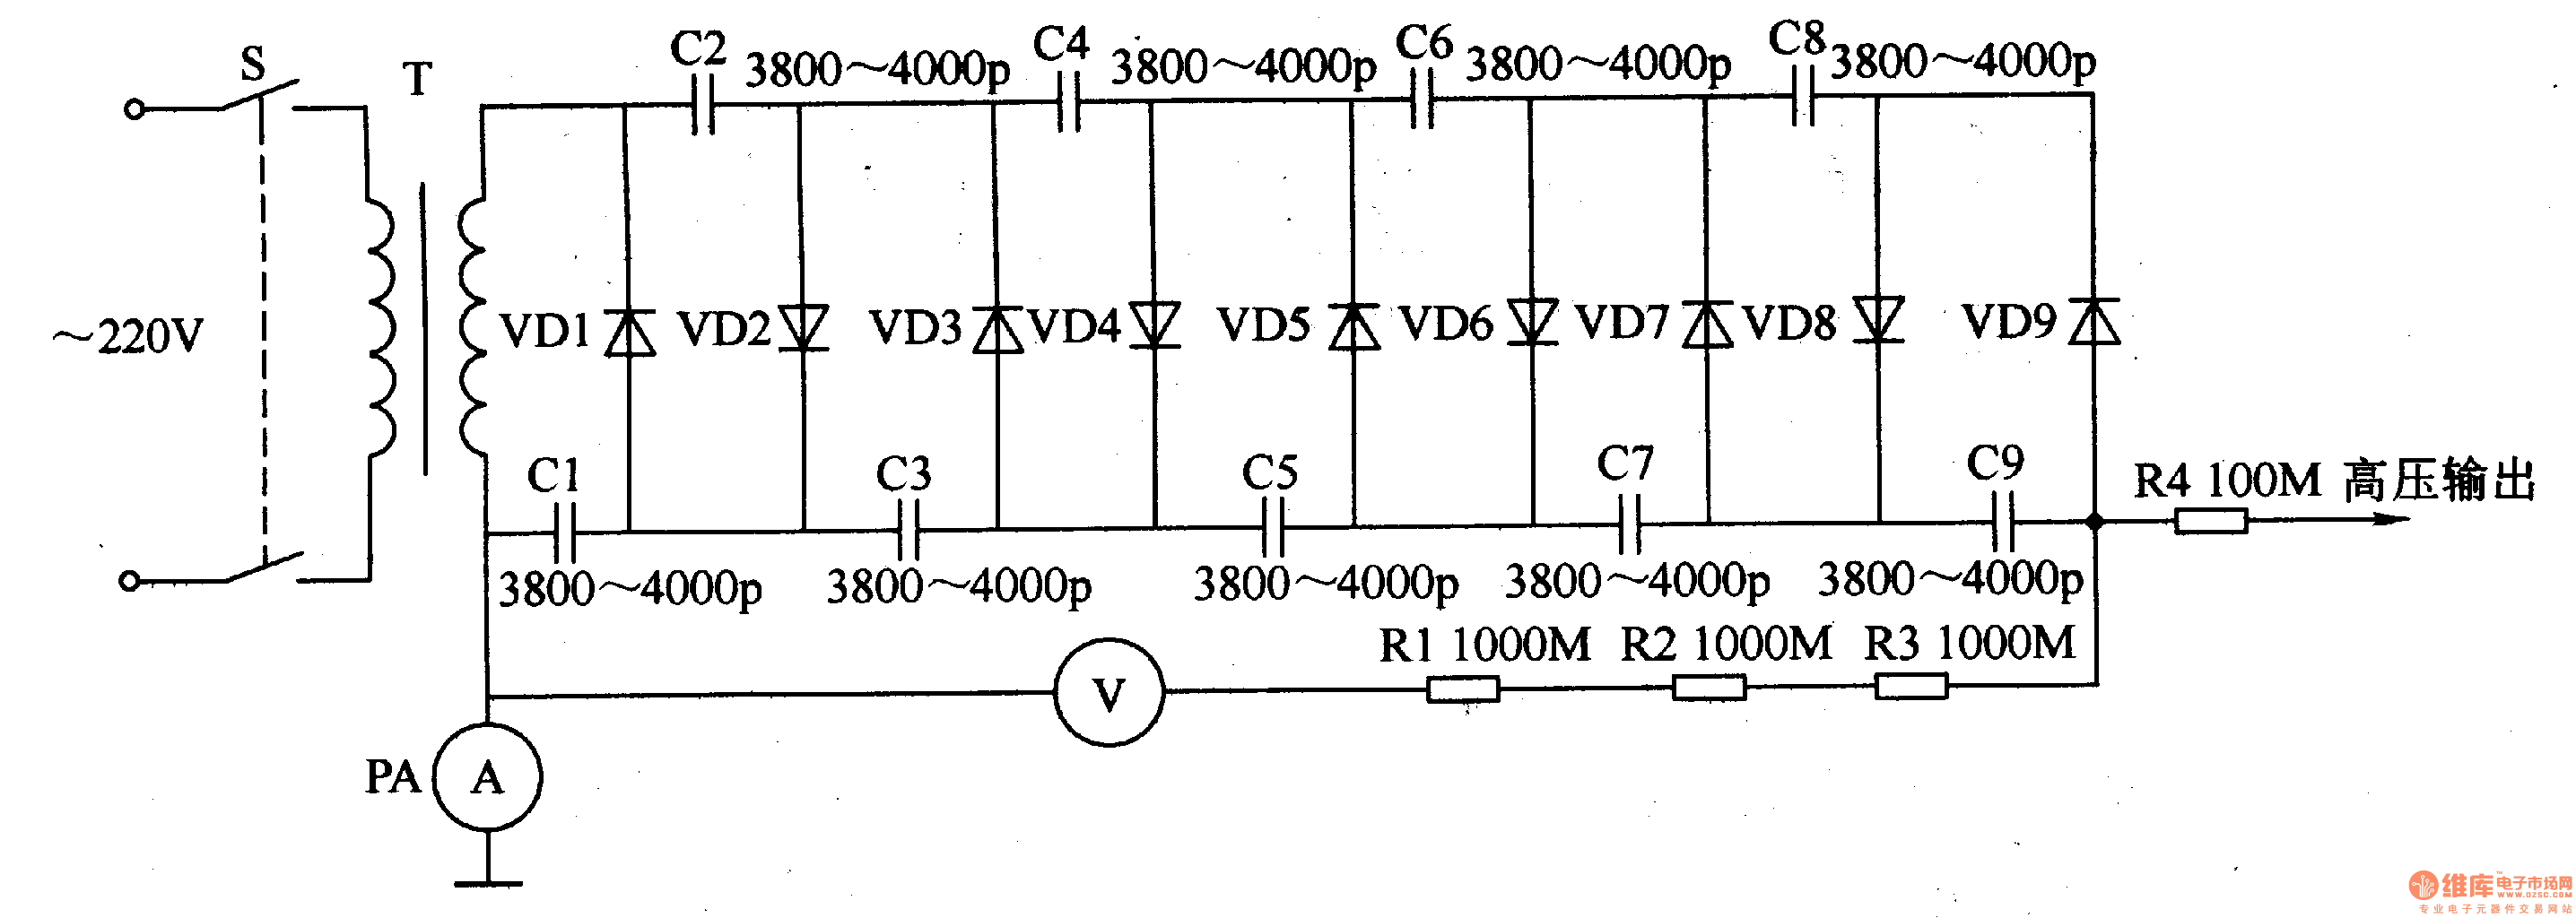 High Voltage Generator Circuit Diagram - Wiring Diagram